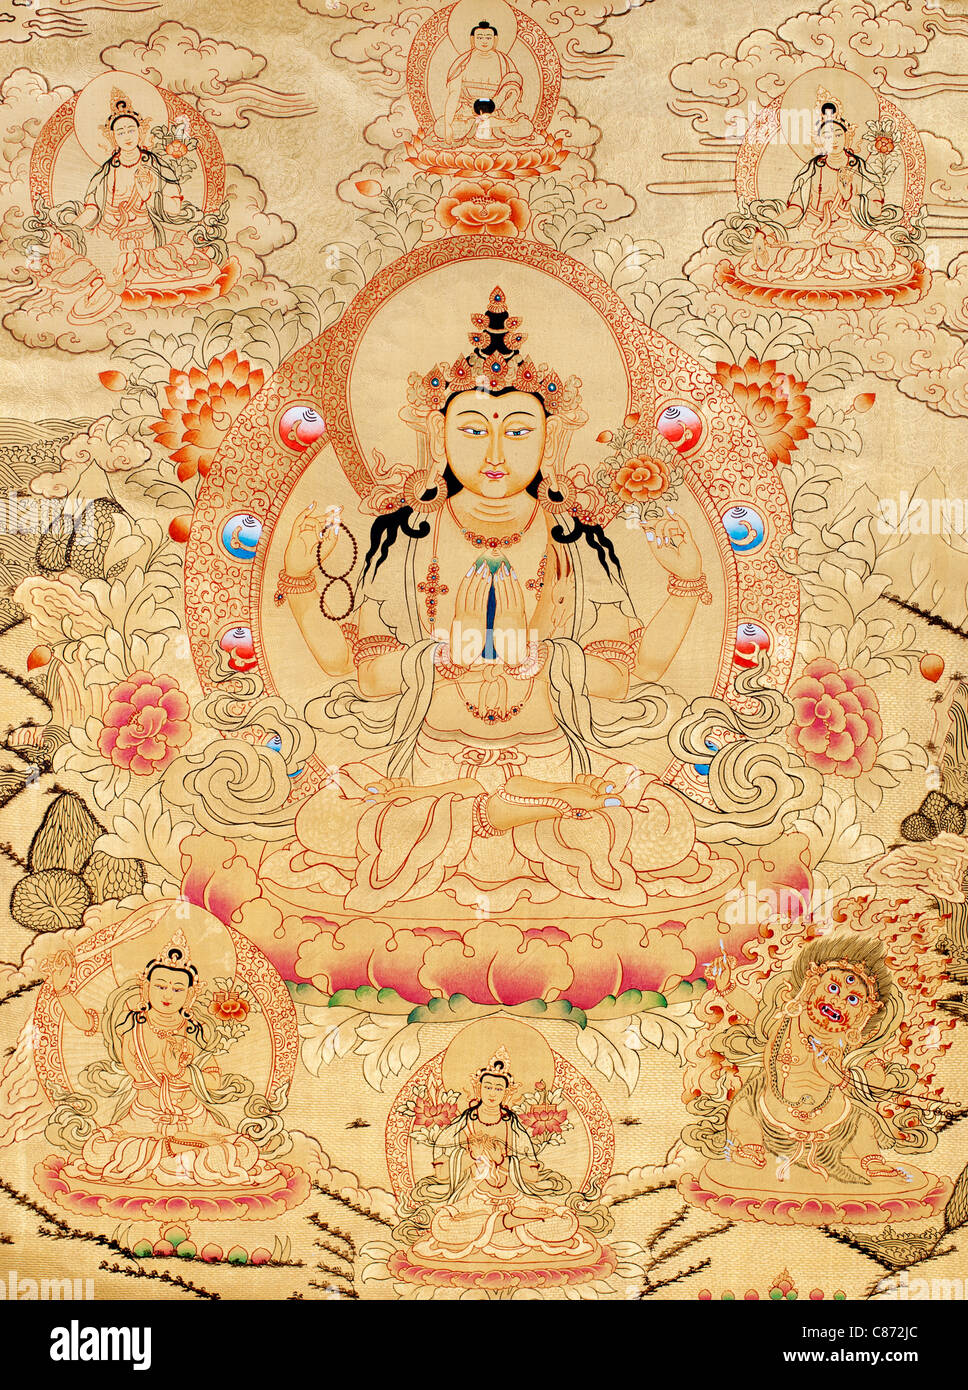 Golden Buddista Tibetana Thangka / Tanka pittura Foto stock - Alamy